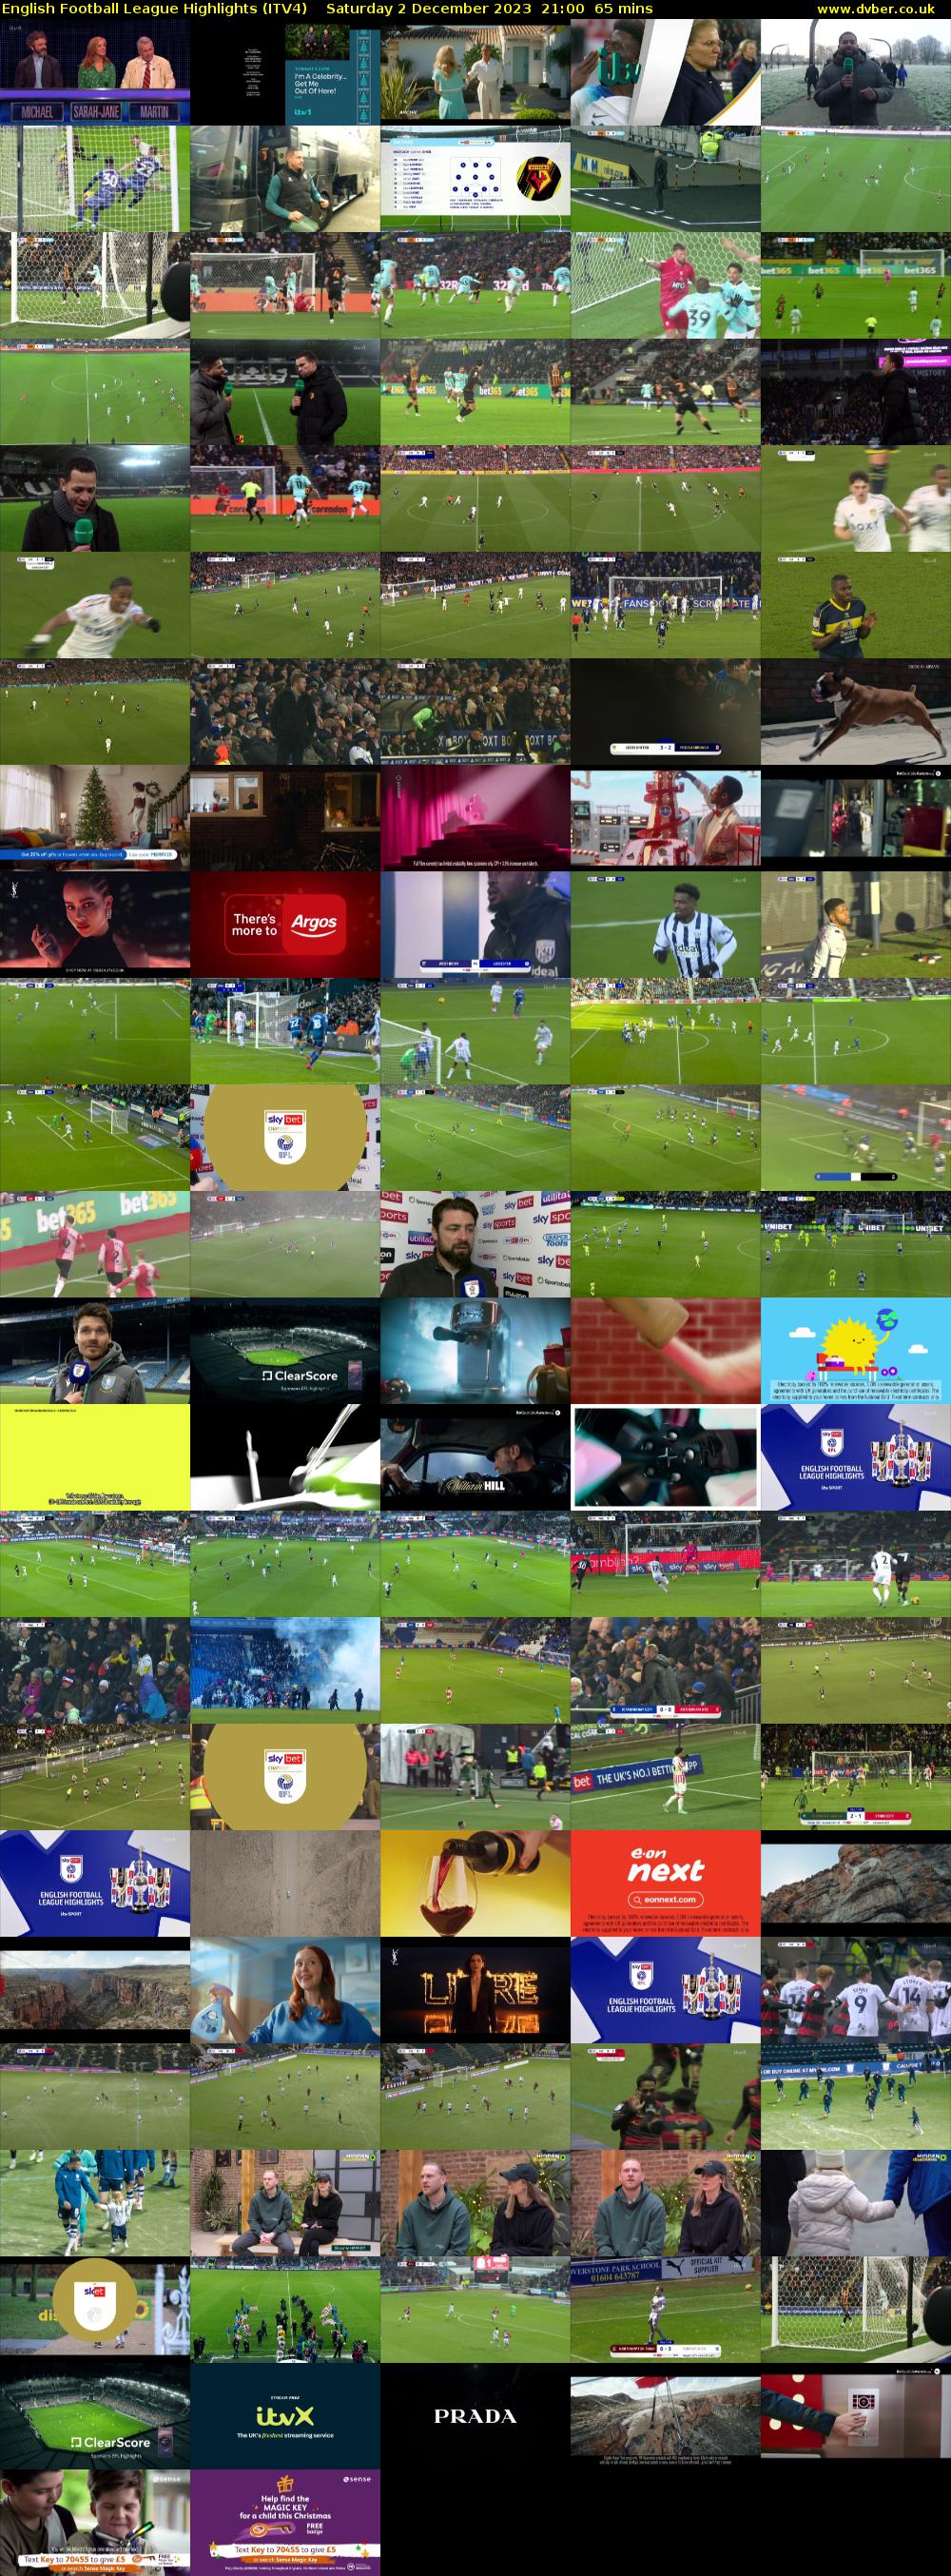 English Football League Highlights (ITV4) Saturday 2 December 2023 21:00 - 22:05